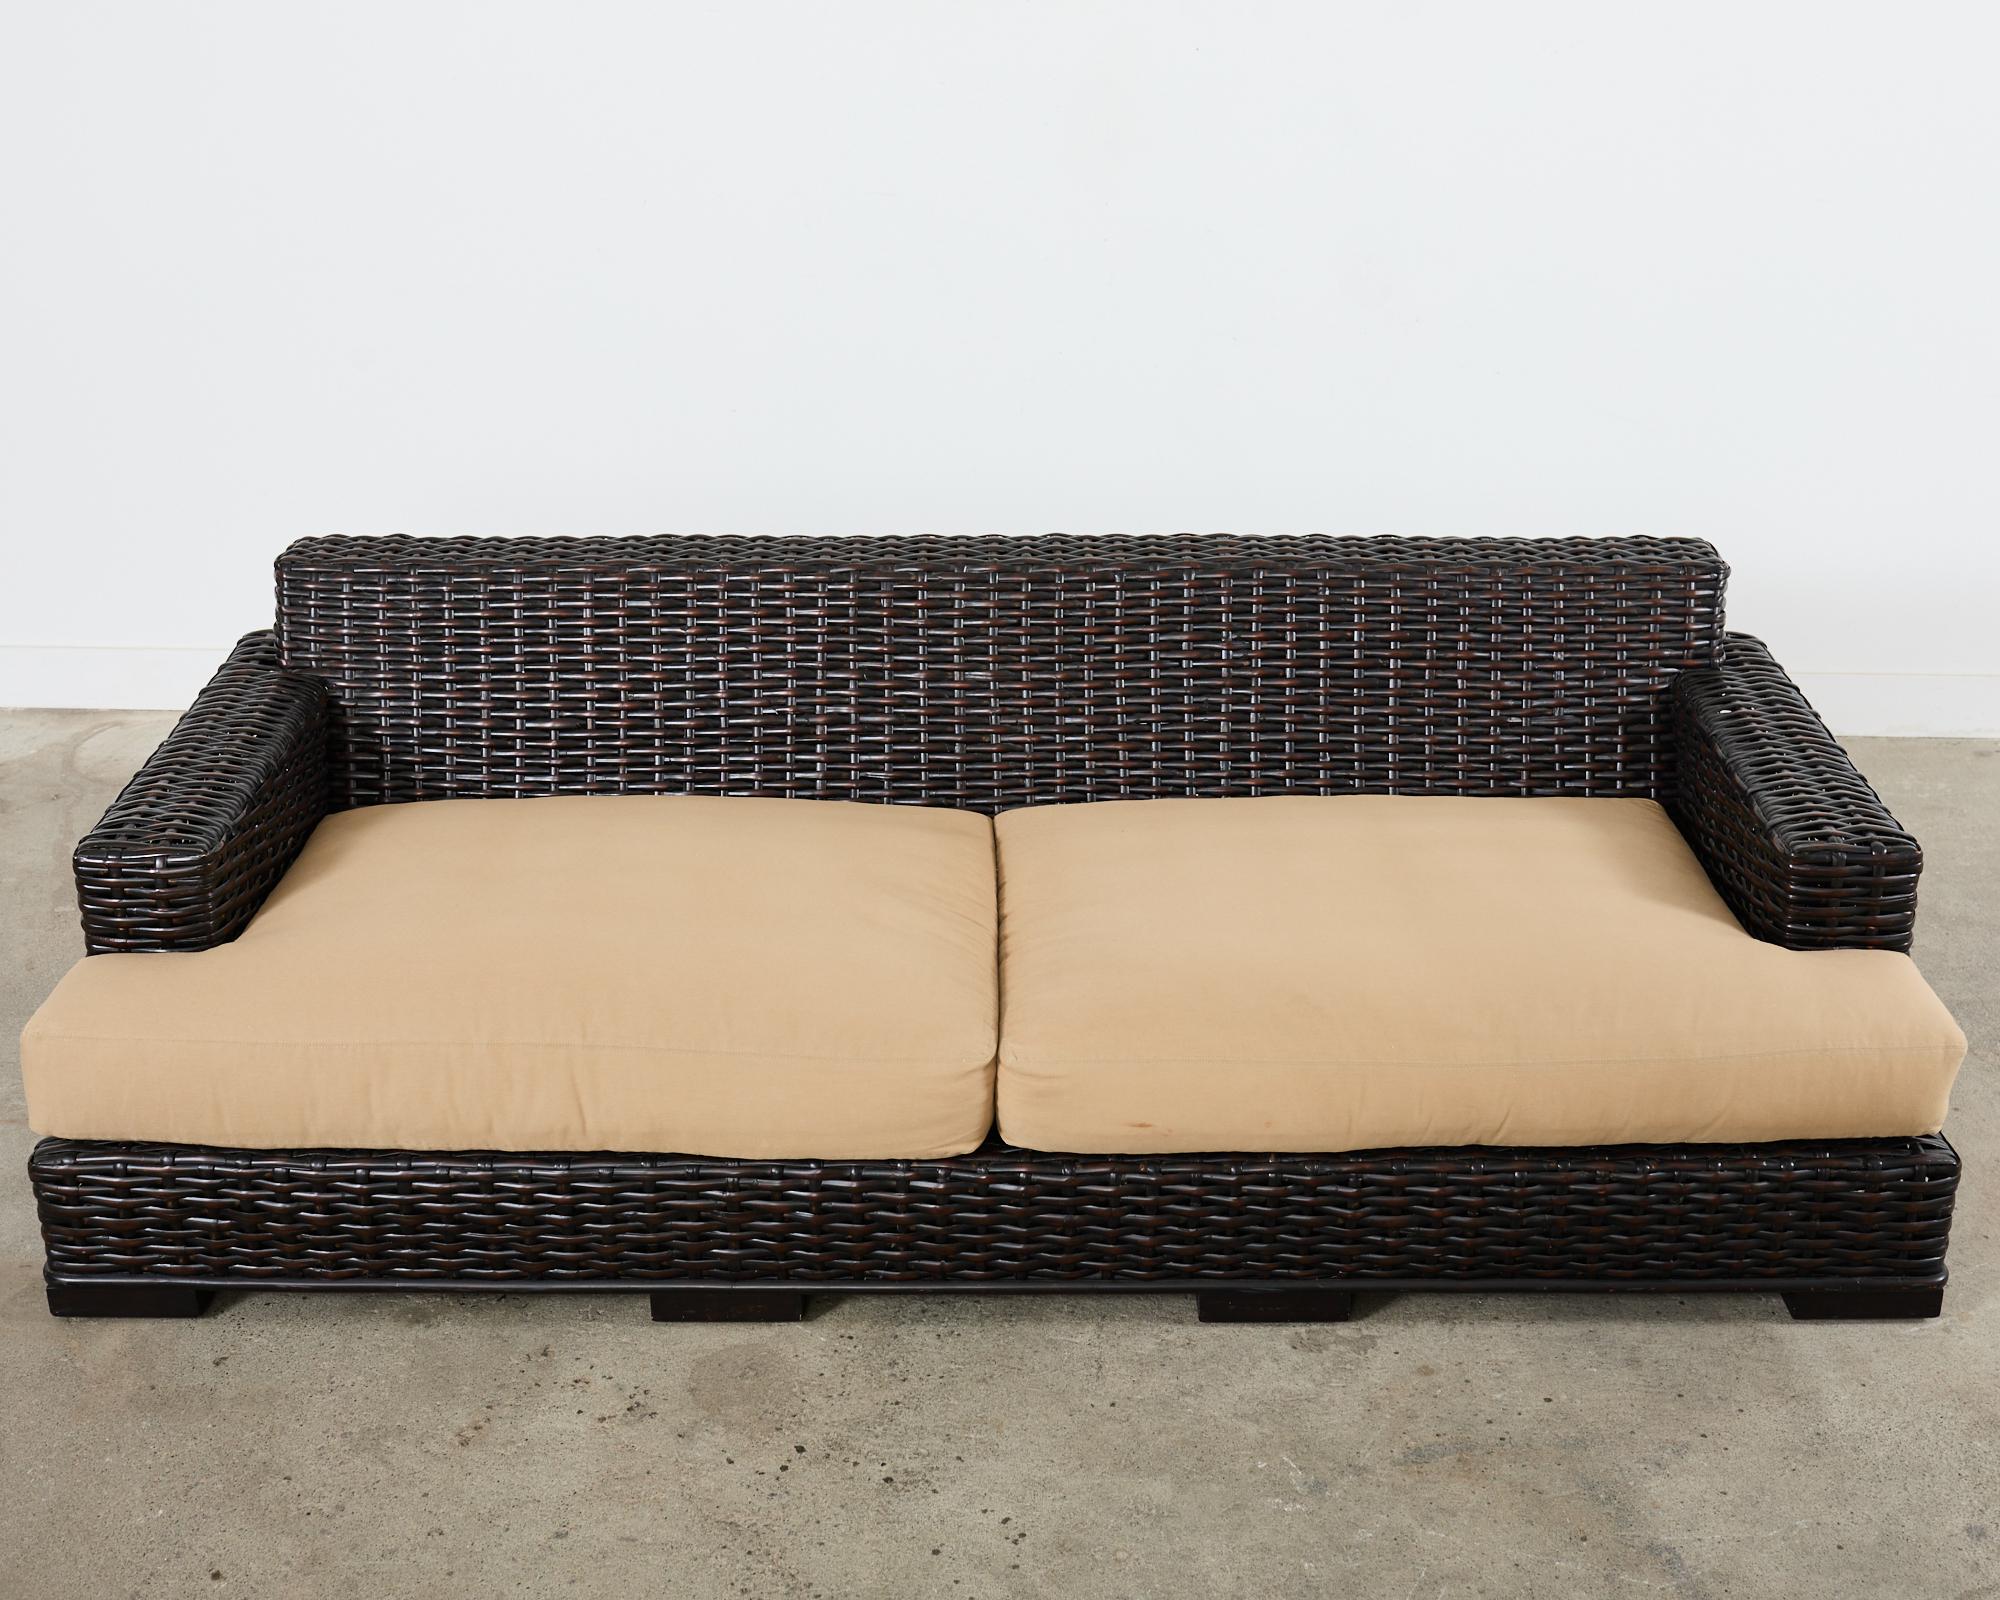 Ralph Lauren Organic Modern Woven Rattan Canyon Sofa For Sale 6